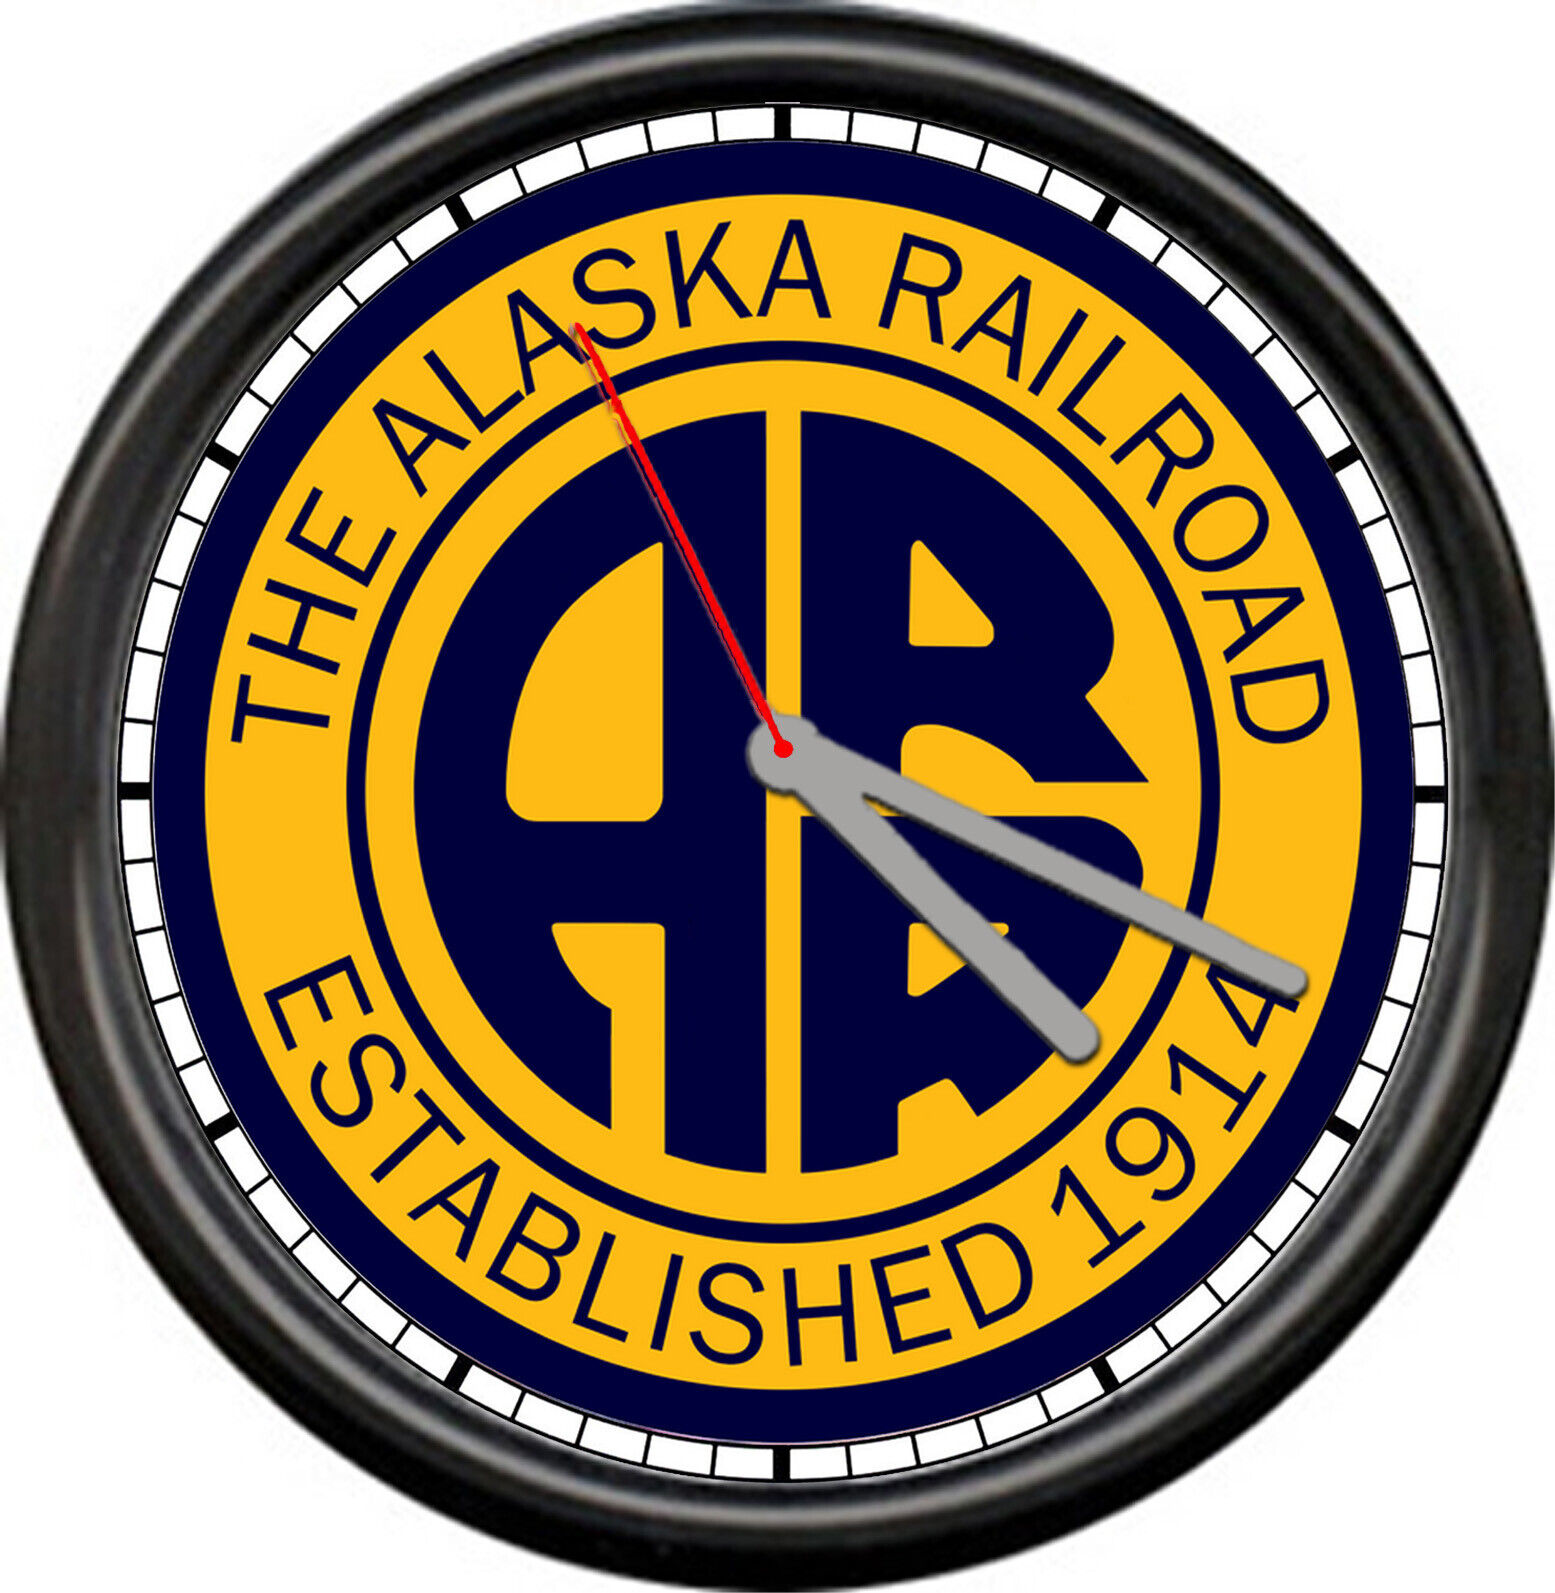 The Alaska Railroad Est 1914 Train Railway  Engineer Conductor Sign Wall Clock